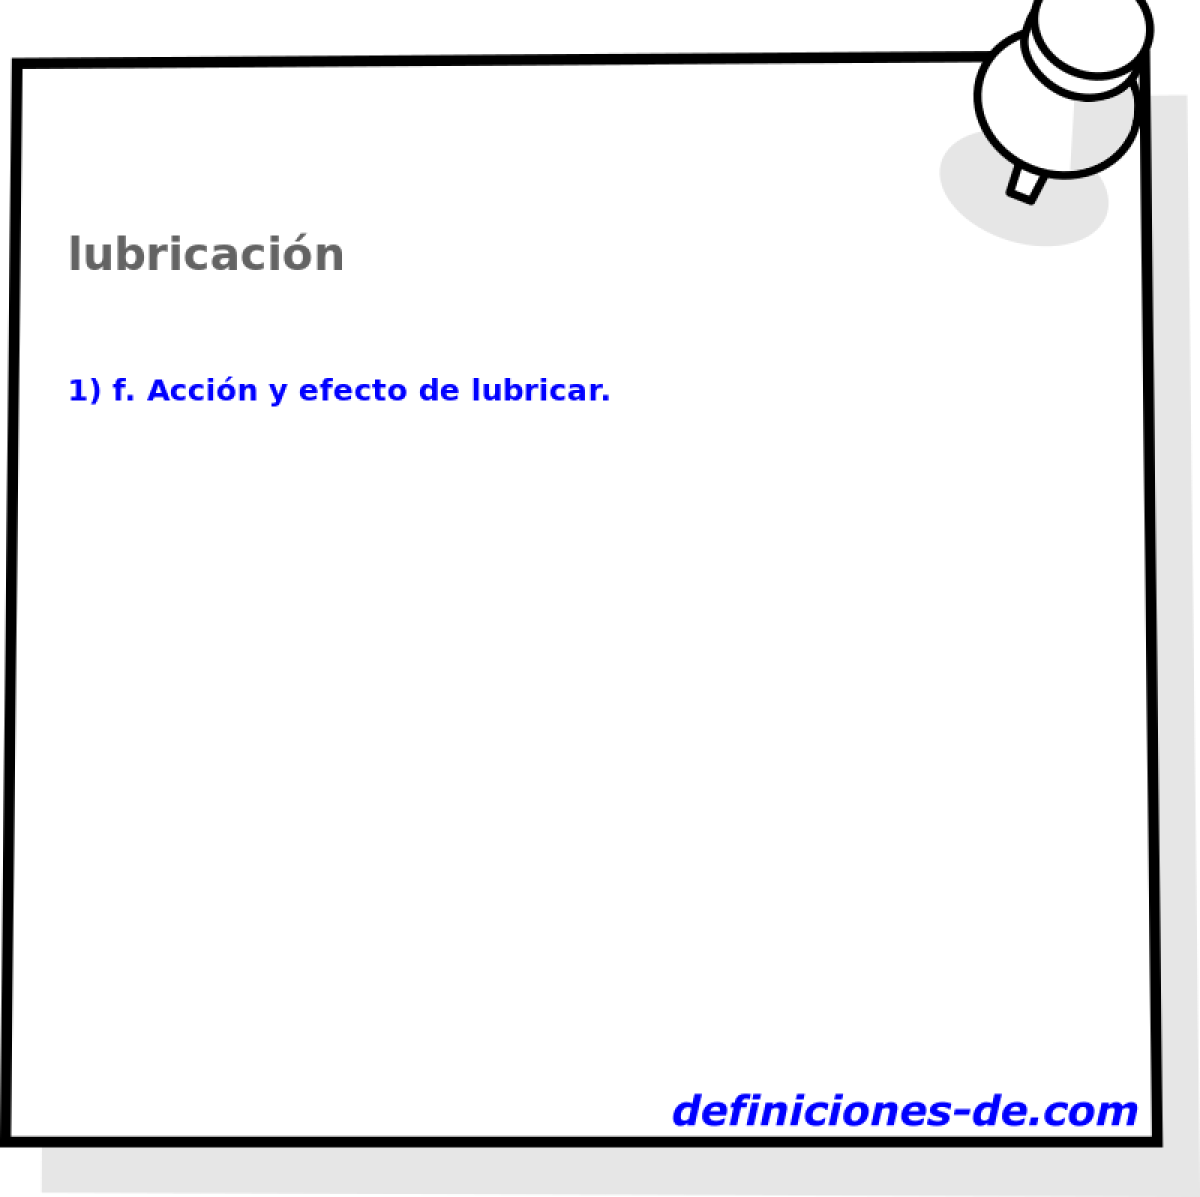 lubricacin 